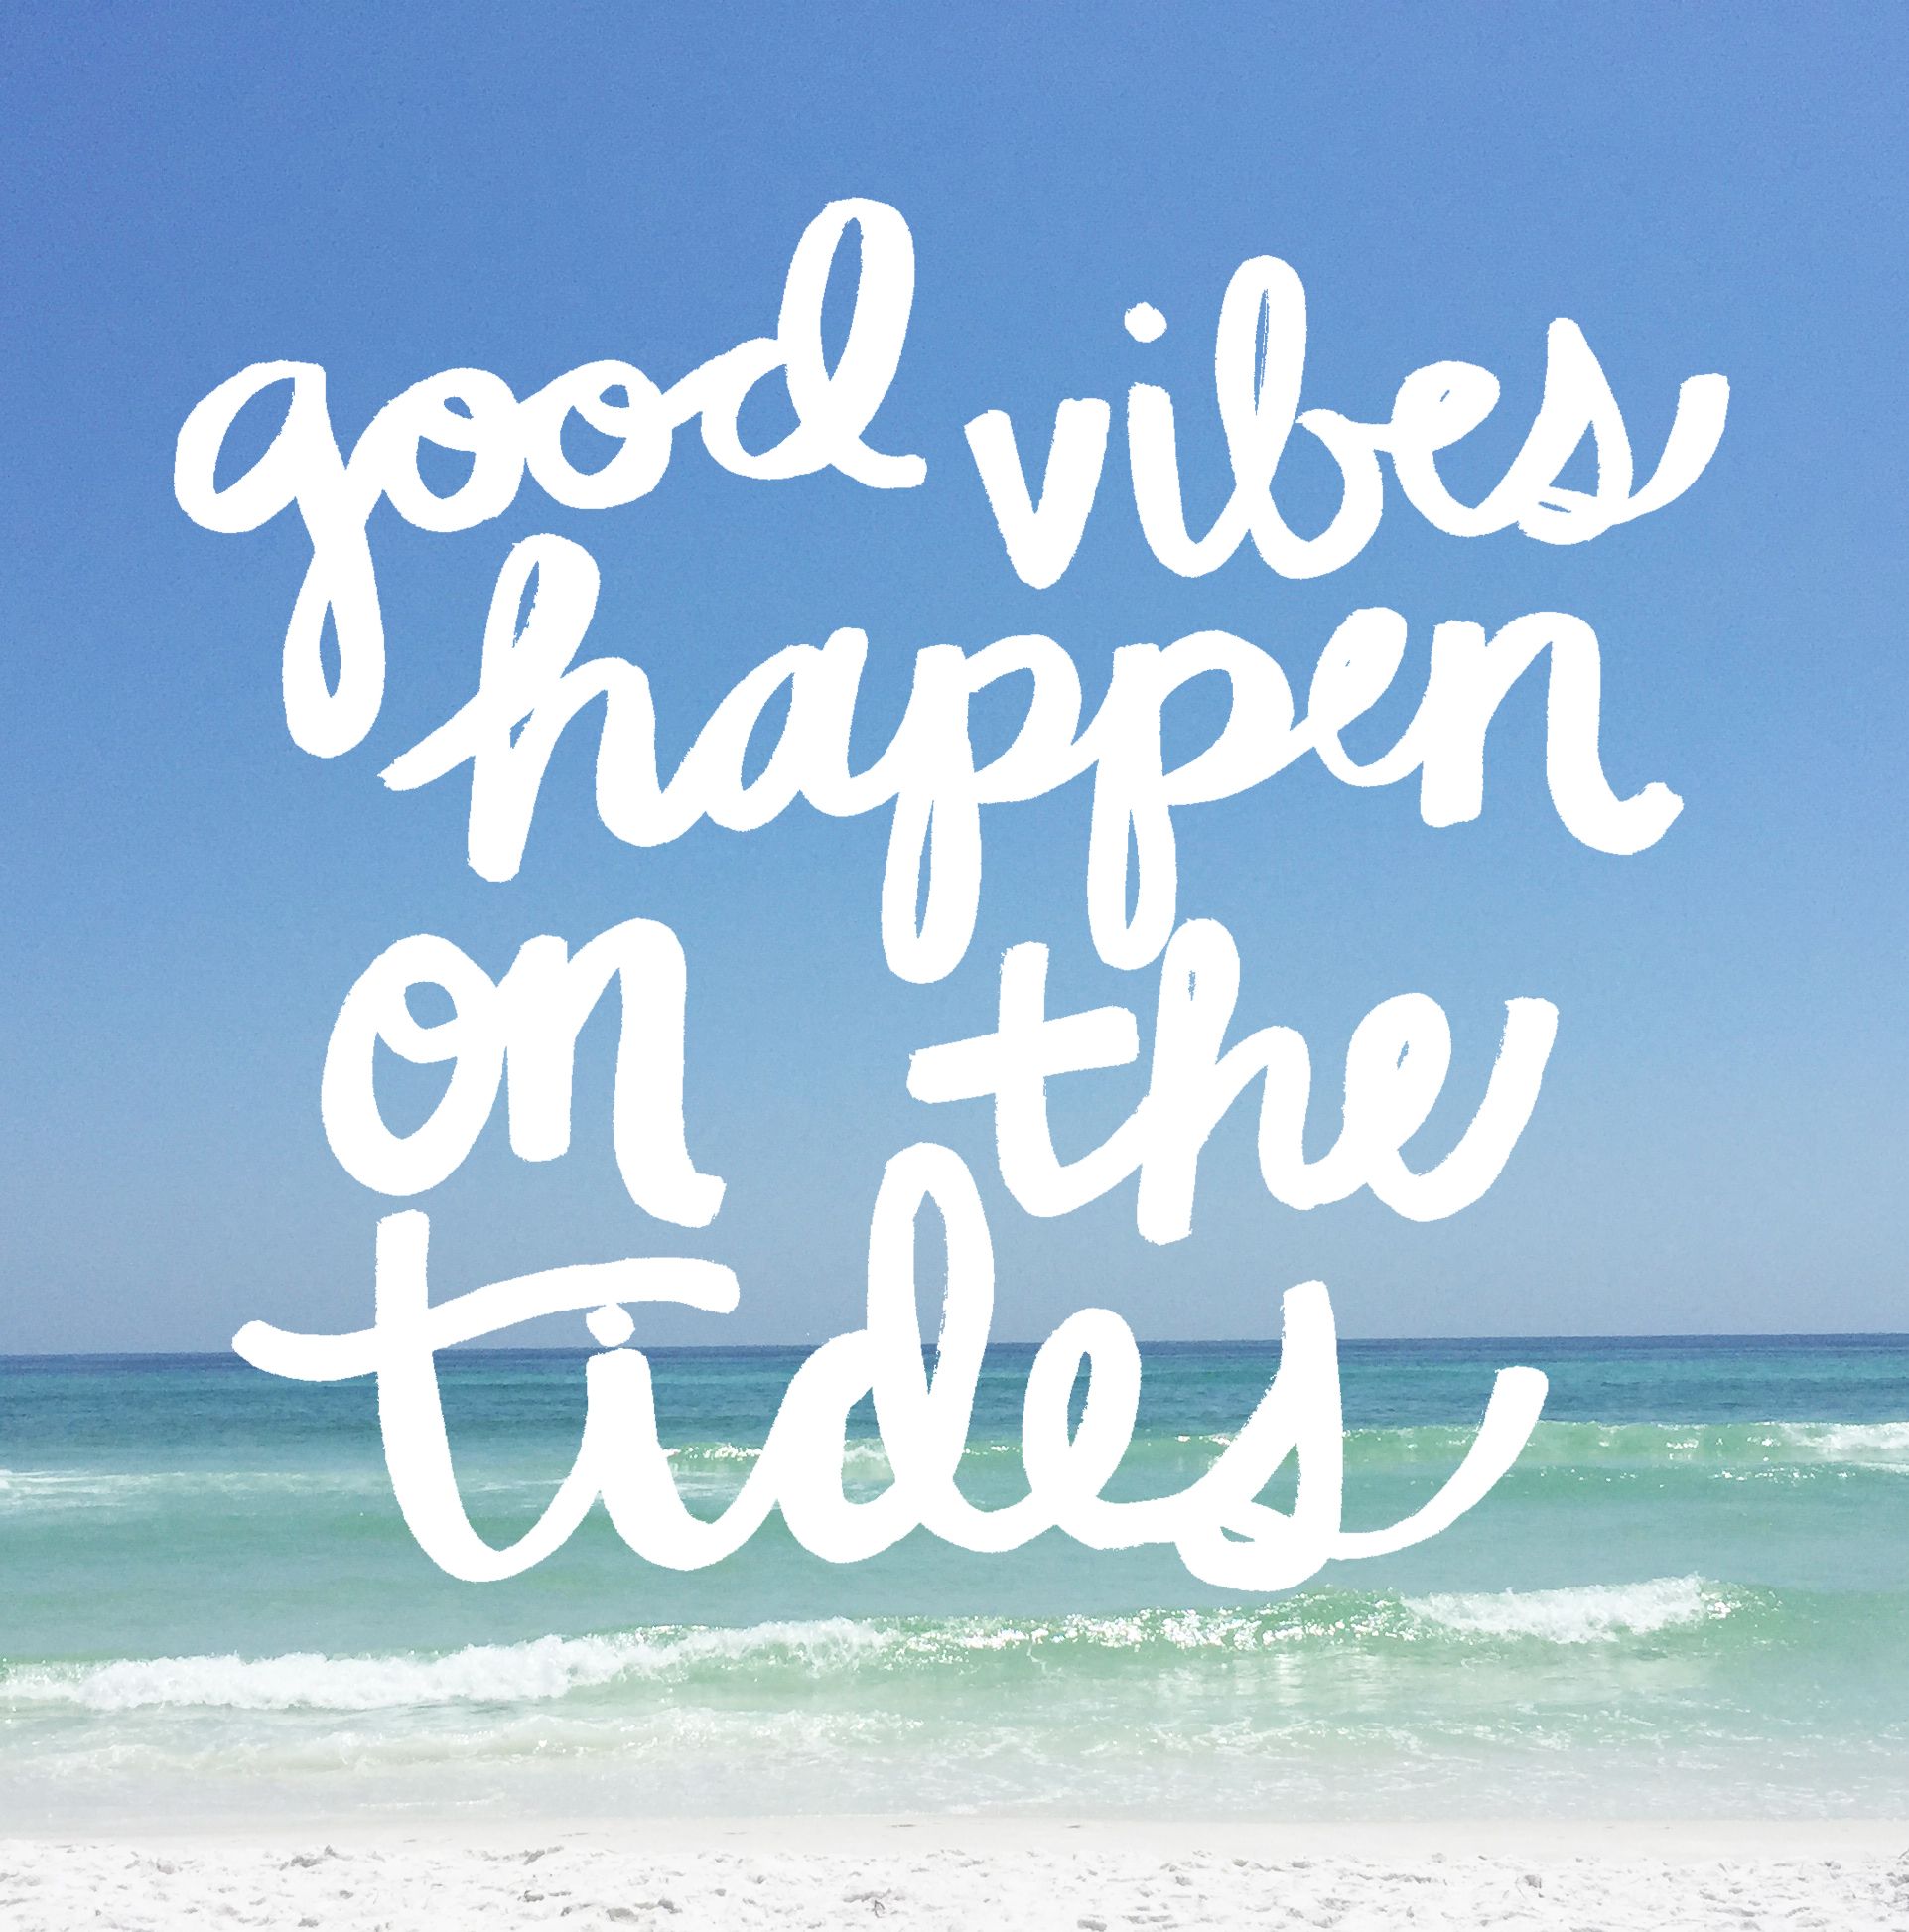 Good vibes happen on the high tides | IG Captions | Pinterest ...